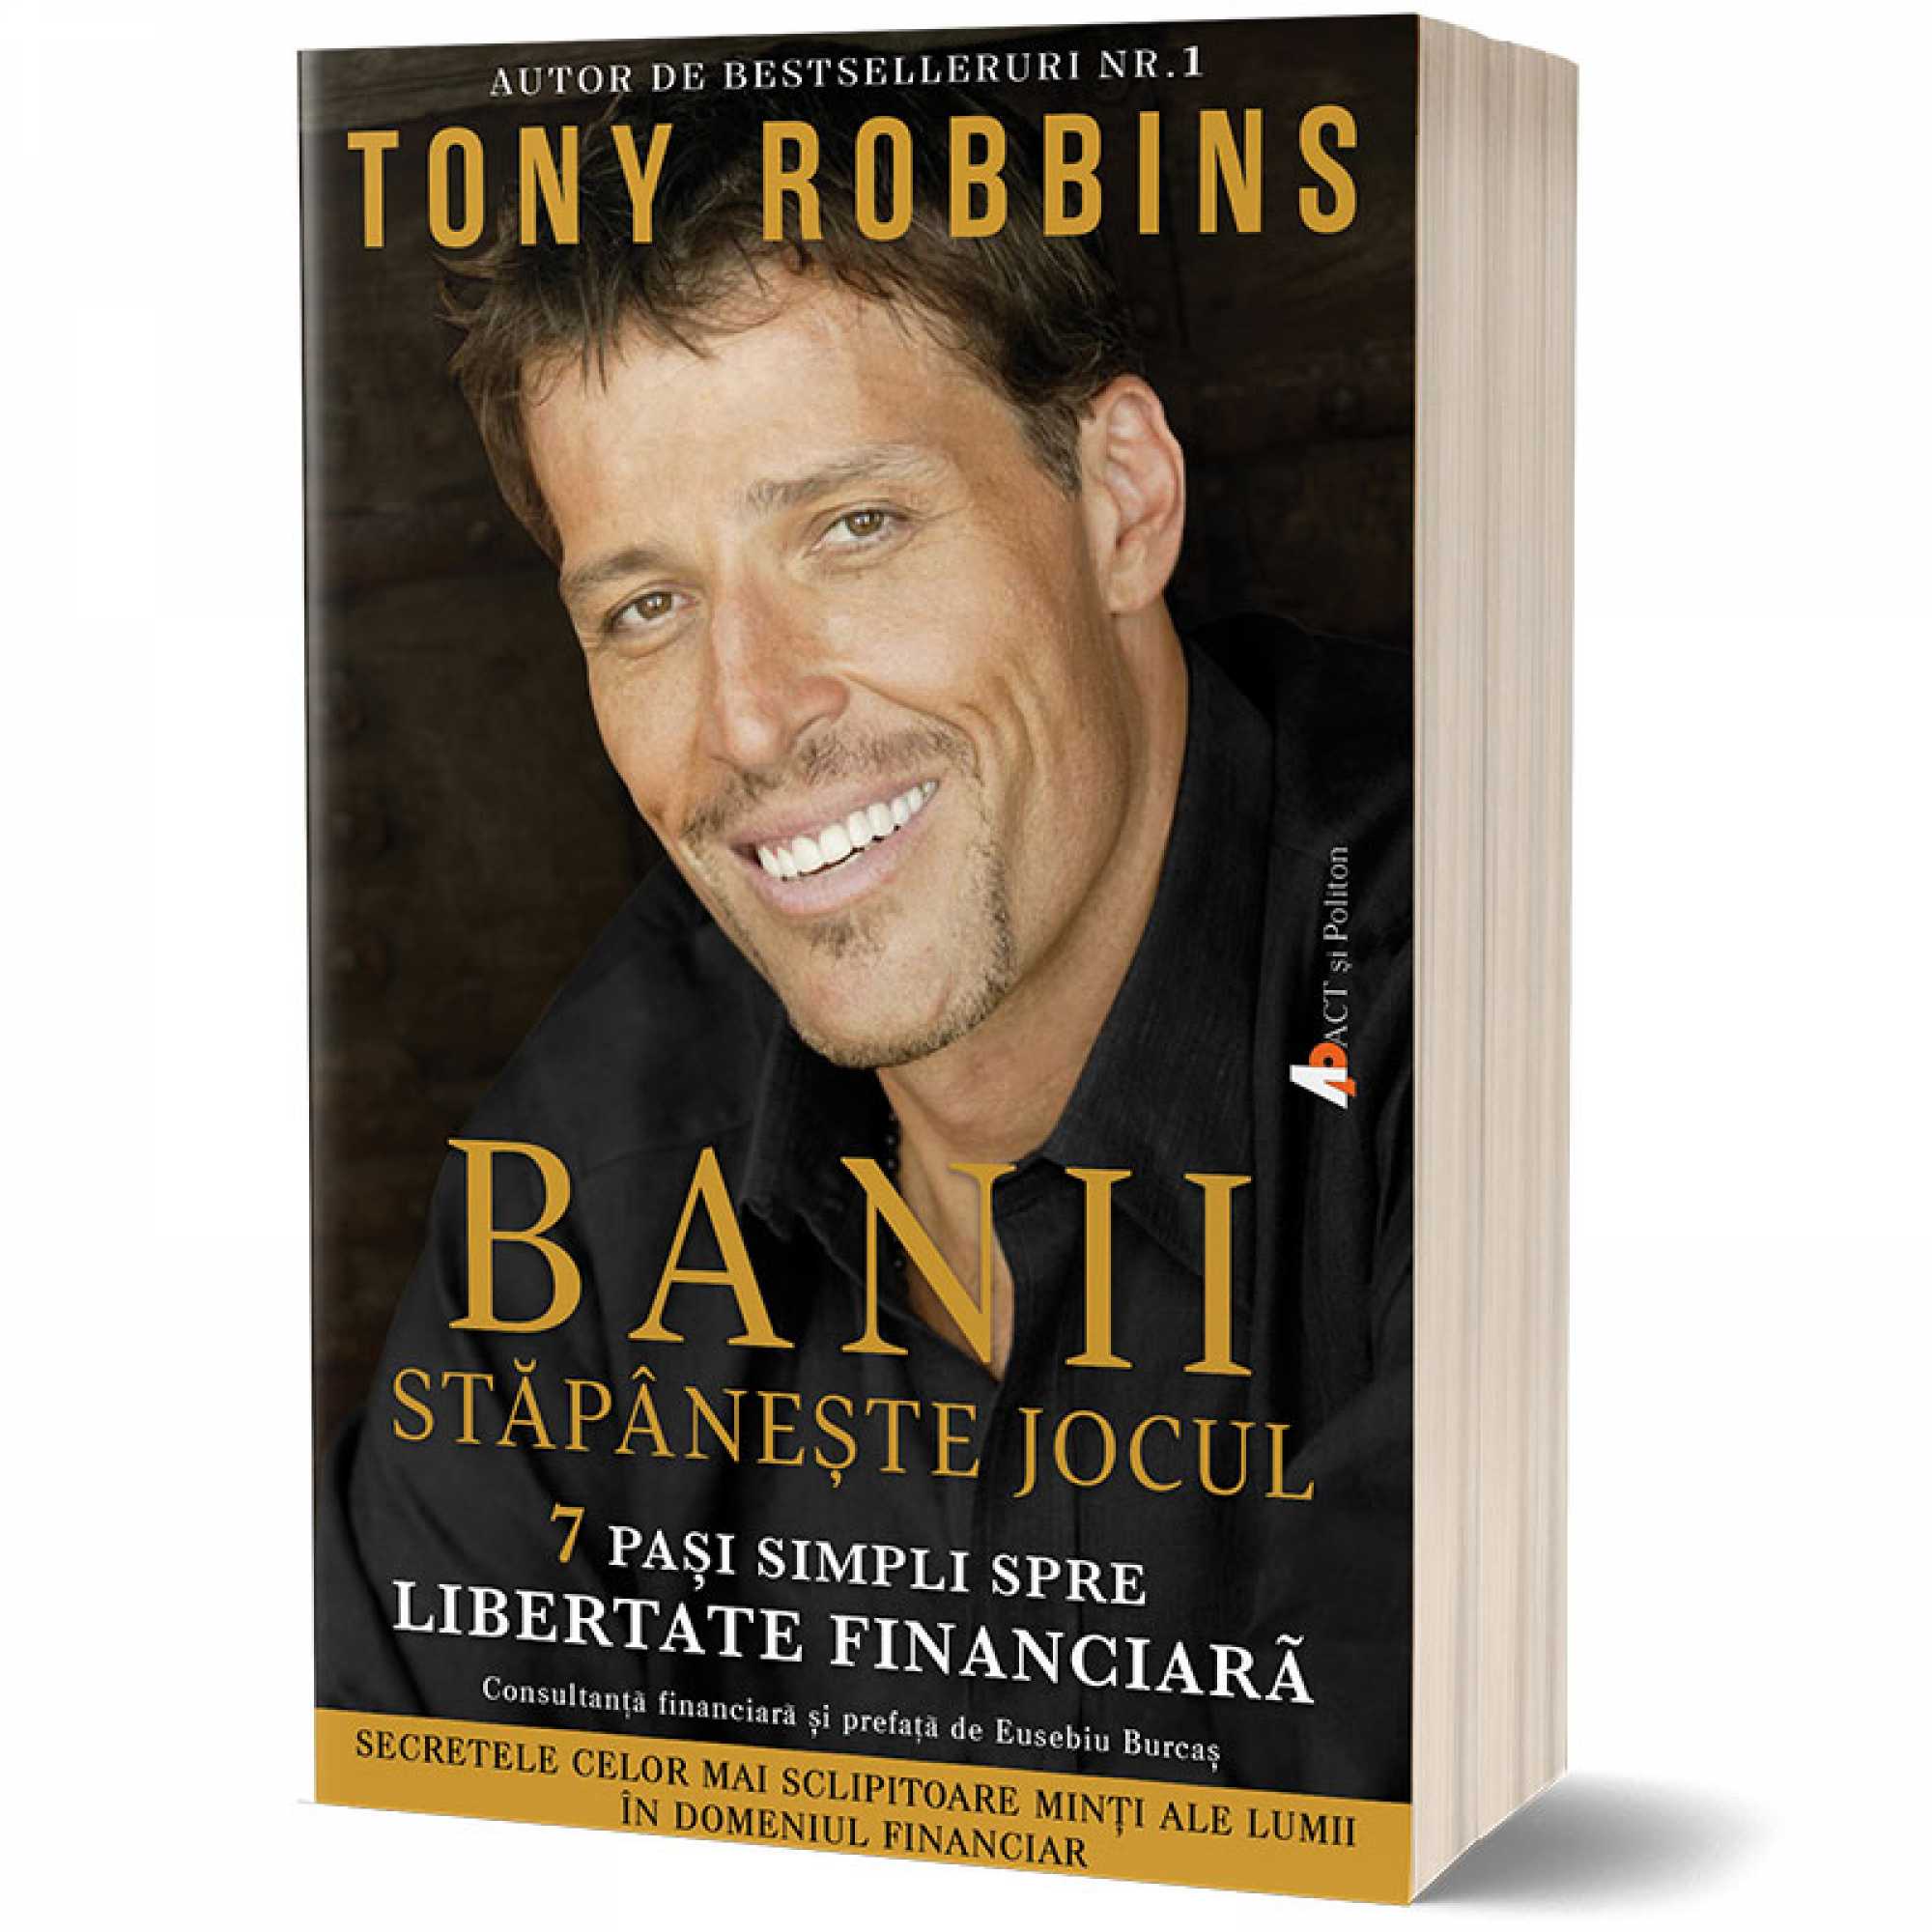 Tony-Robbins-BANII-Stapaneste-Jocul-2000x2000